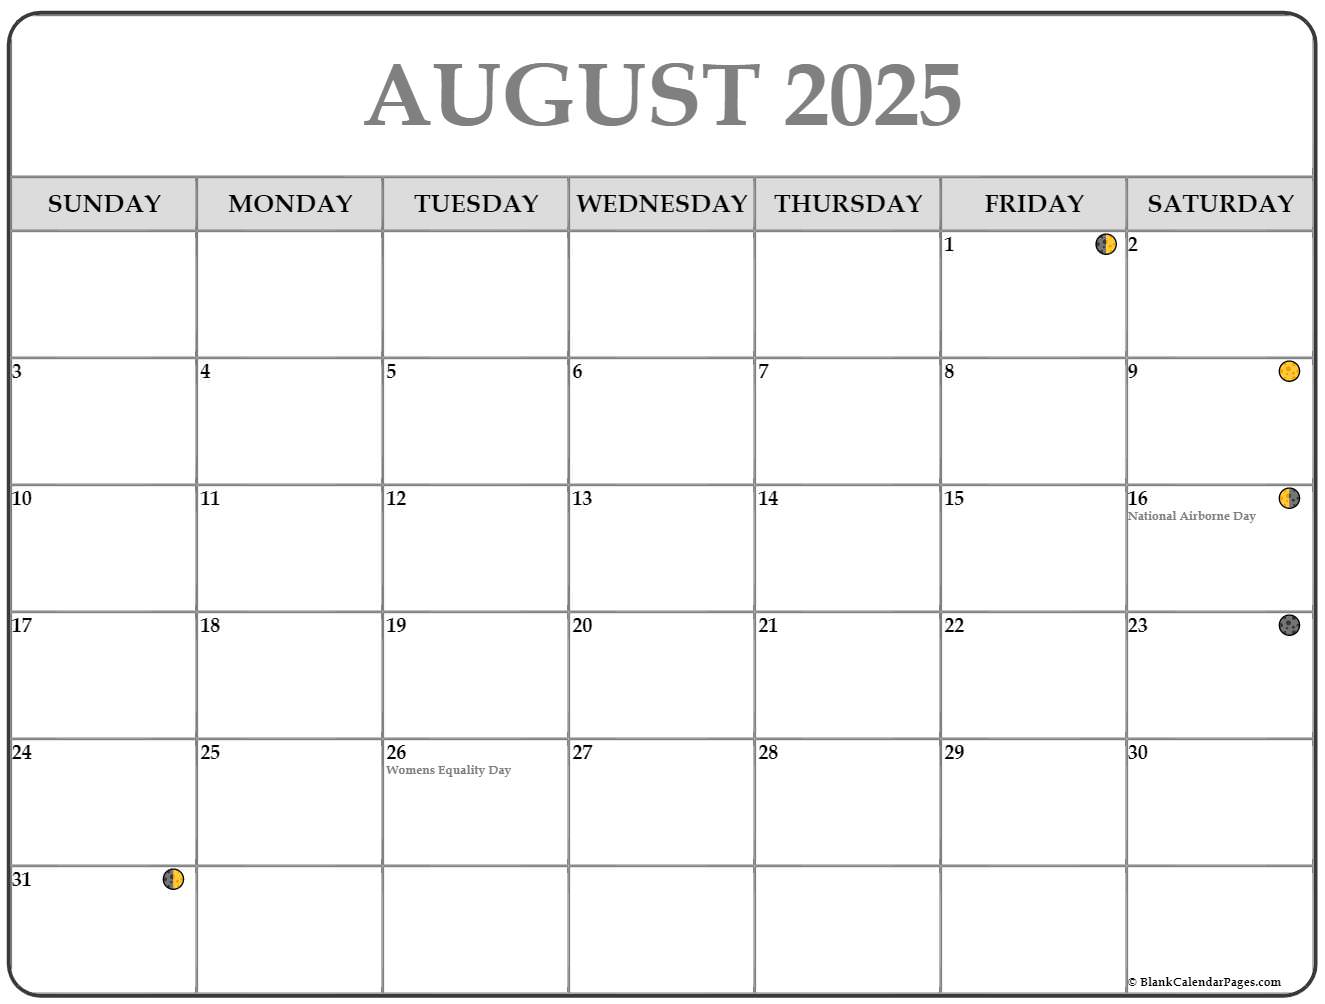 August 2025 Lunar Calendar Moon Phase Calendar